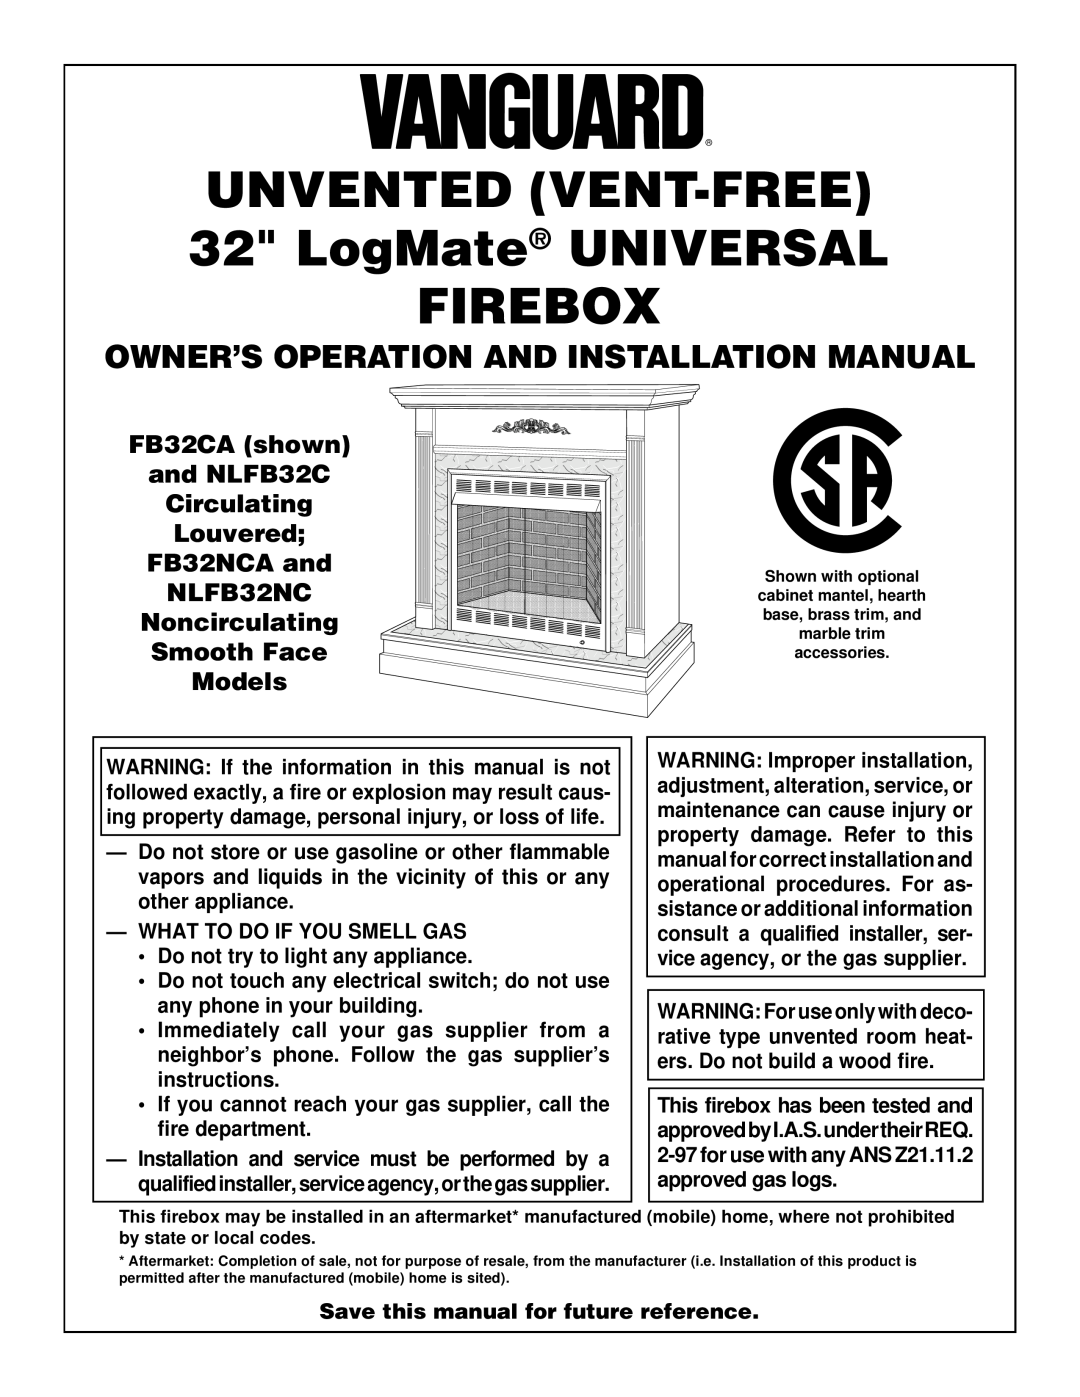 Vanguard Managed Solutions NLFB32NC installation manual Owner’S Operation And Installation Manual, ¢Qqqqqq,,,,,,¢¢¢¢¢ 